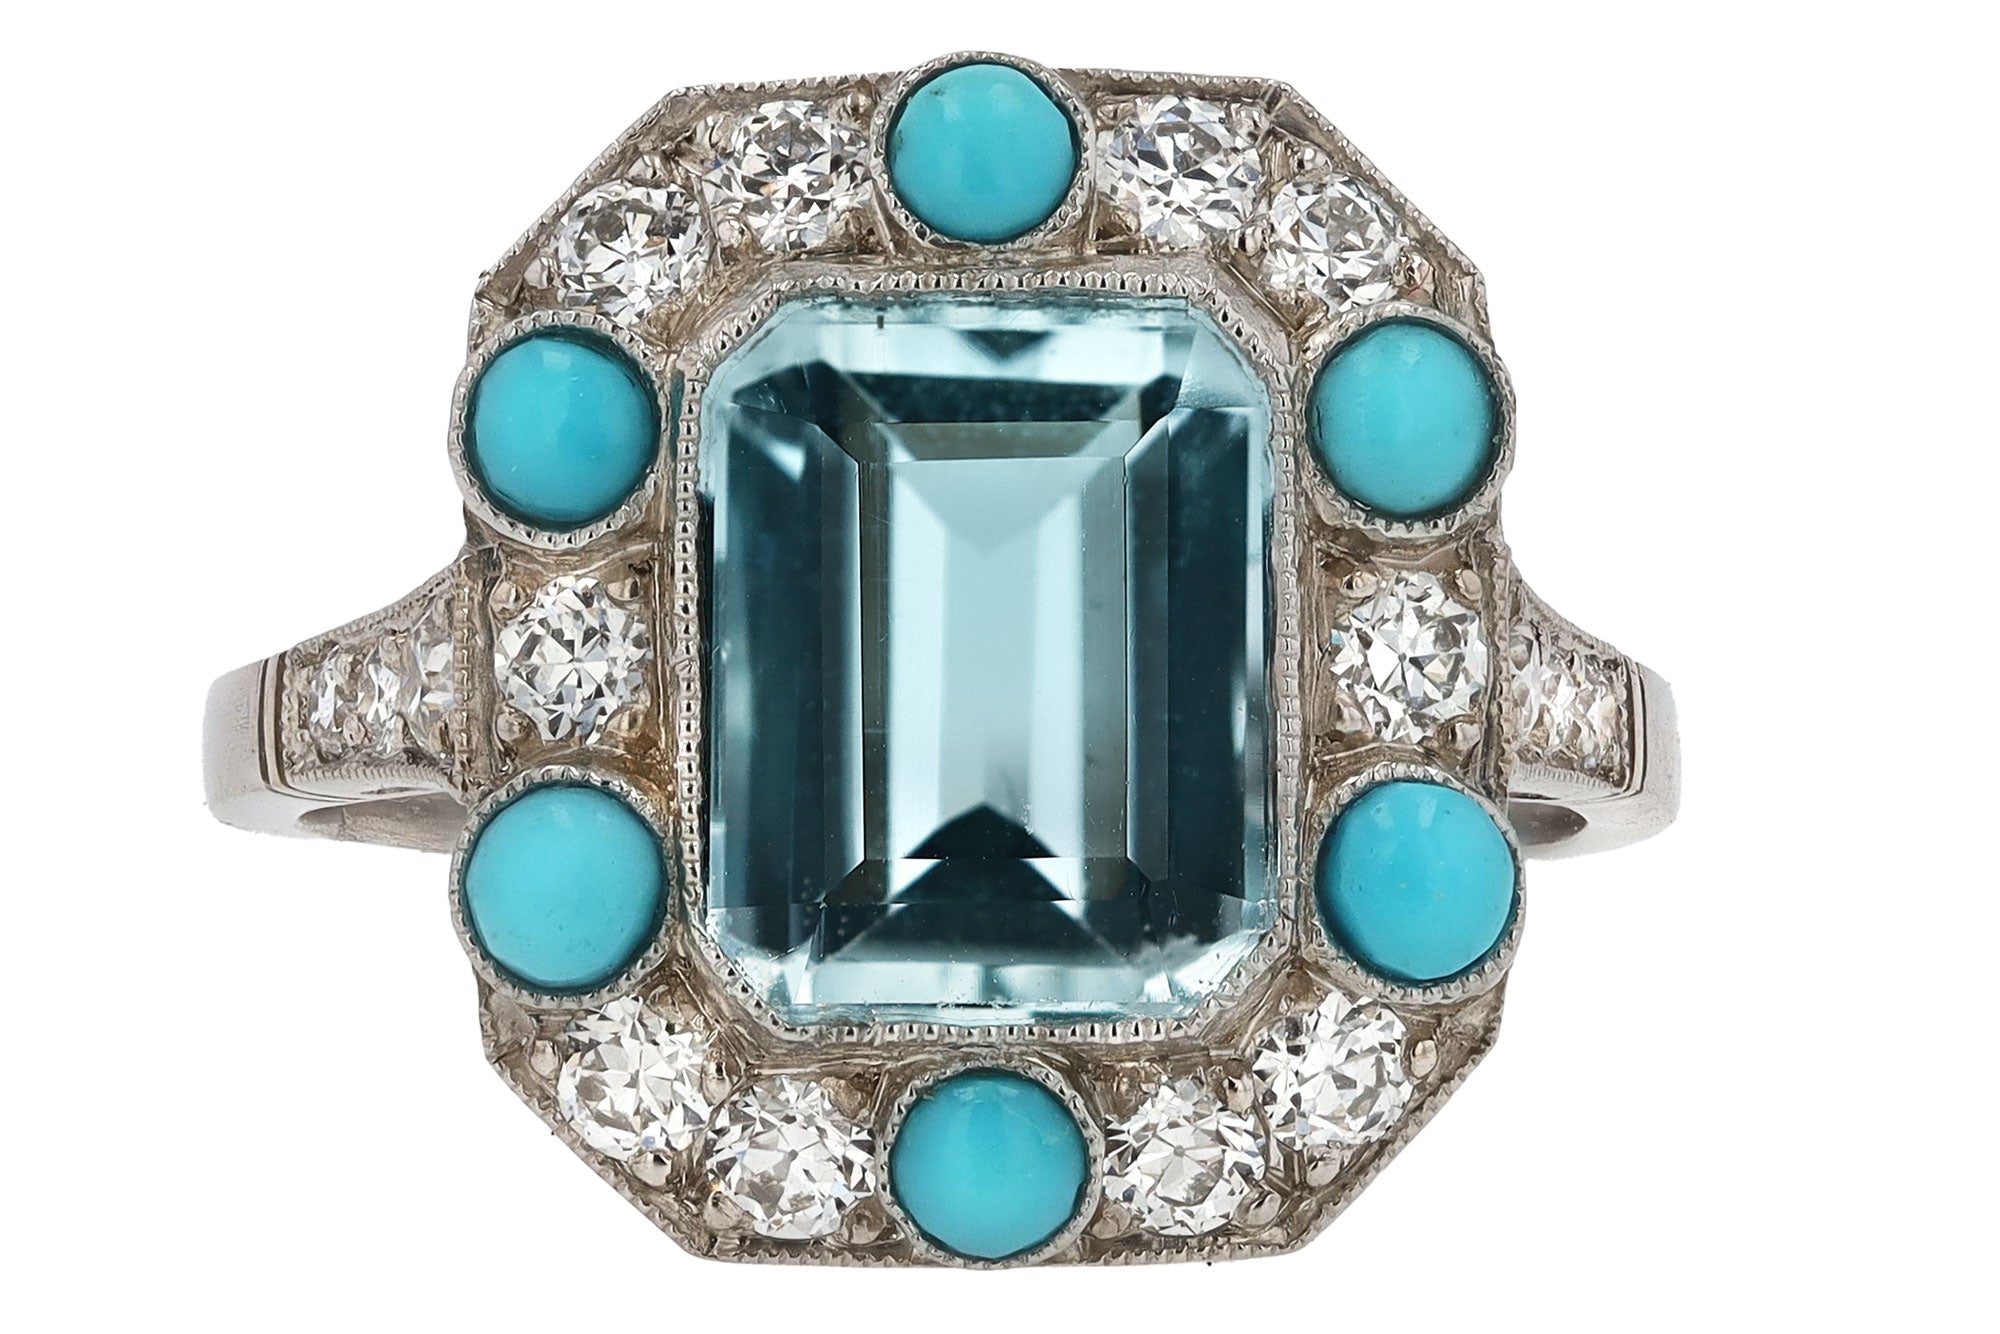 Art Deco Revival Aquamarine Turquoise and Diamond Ring